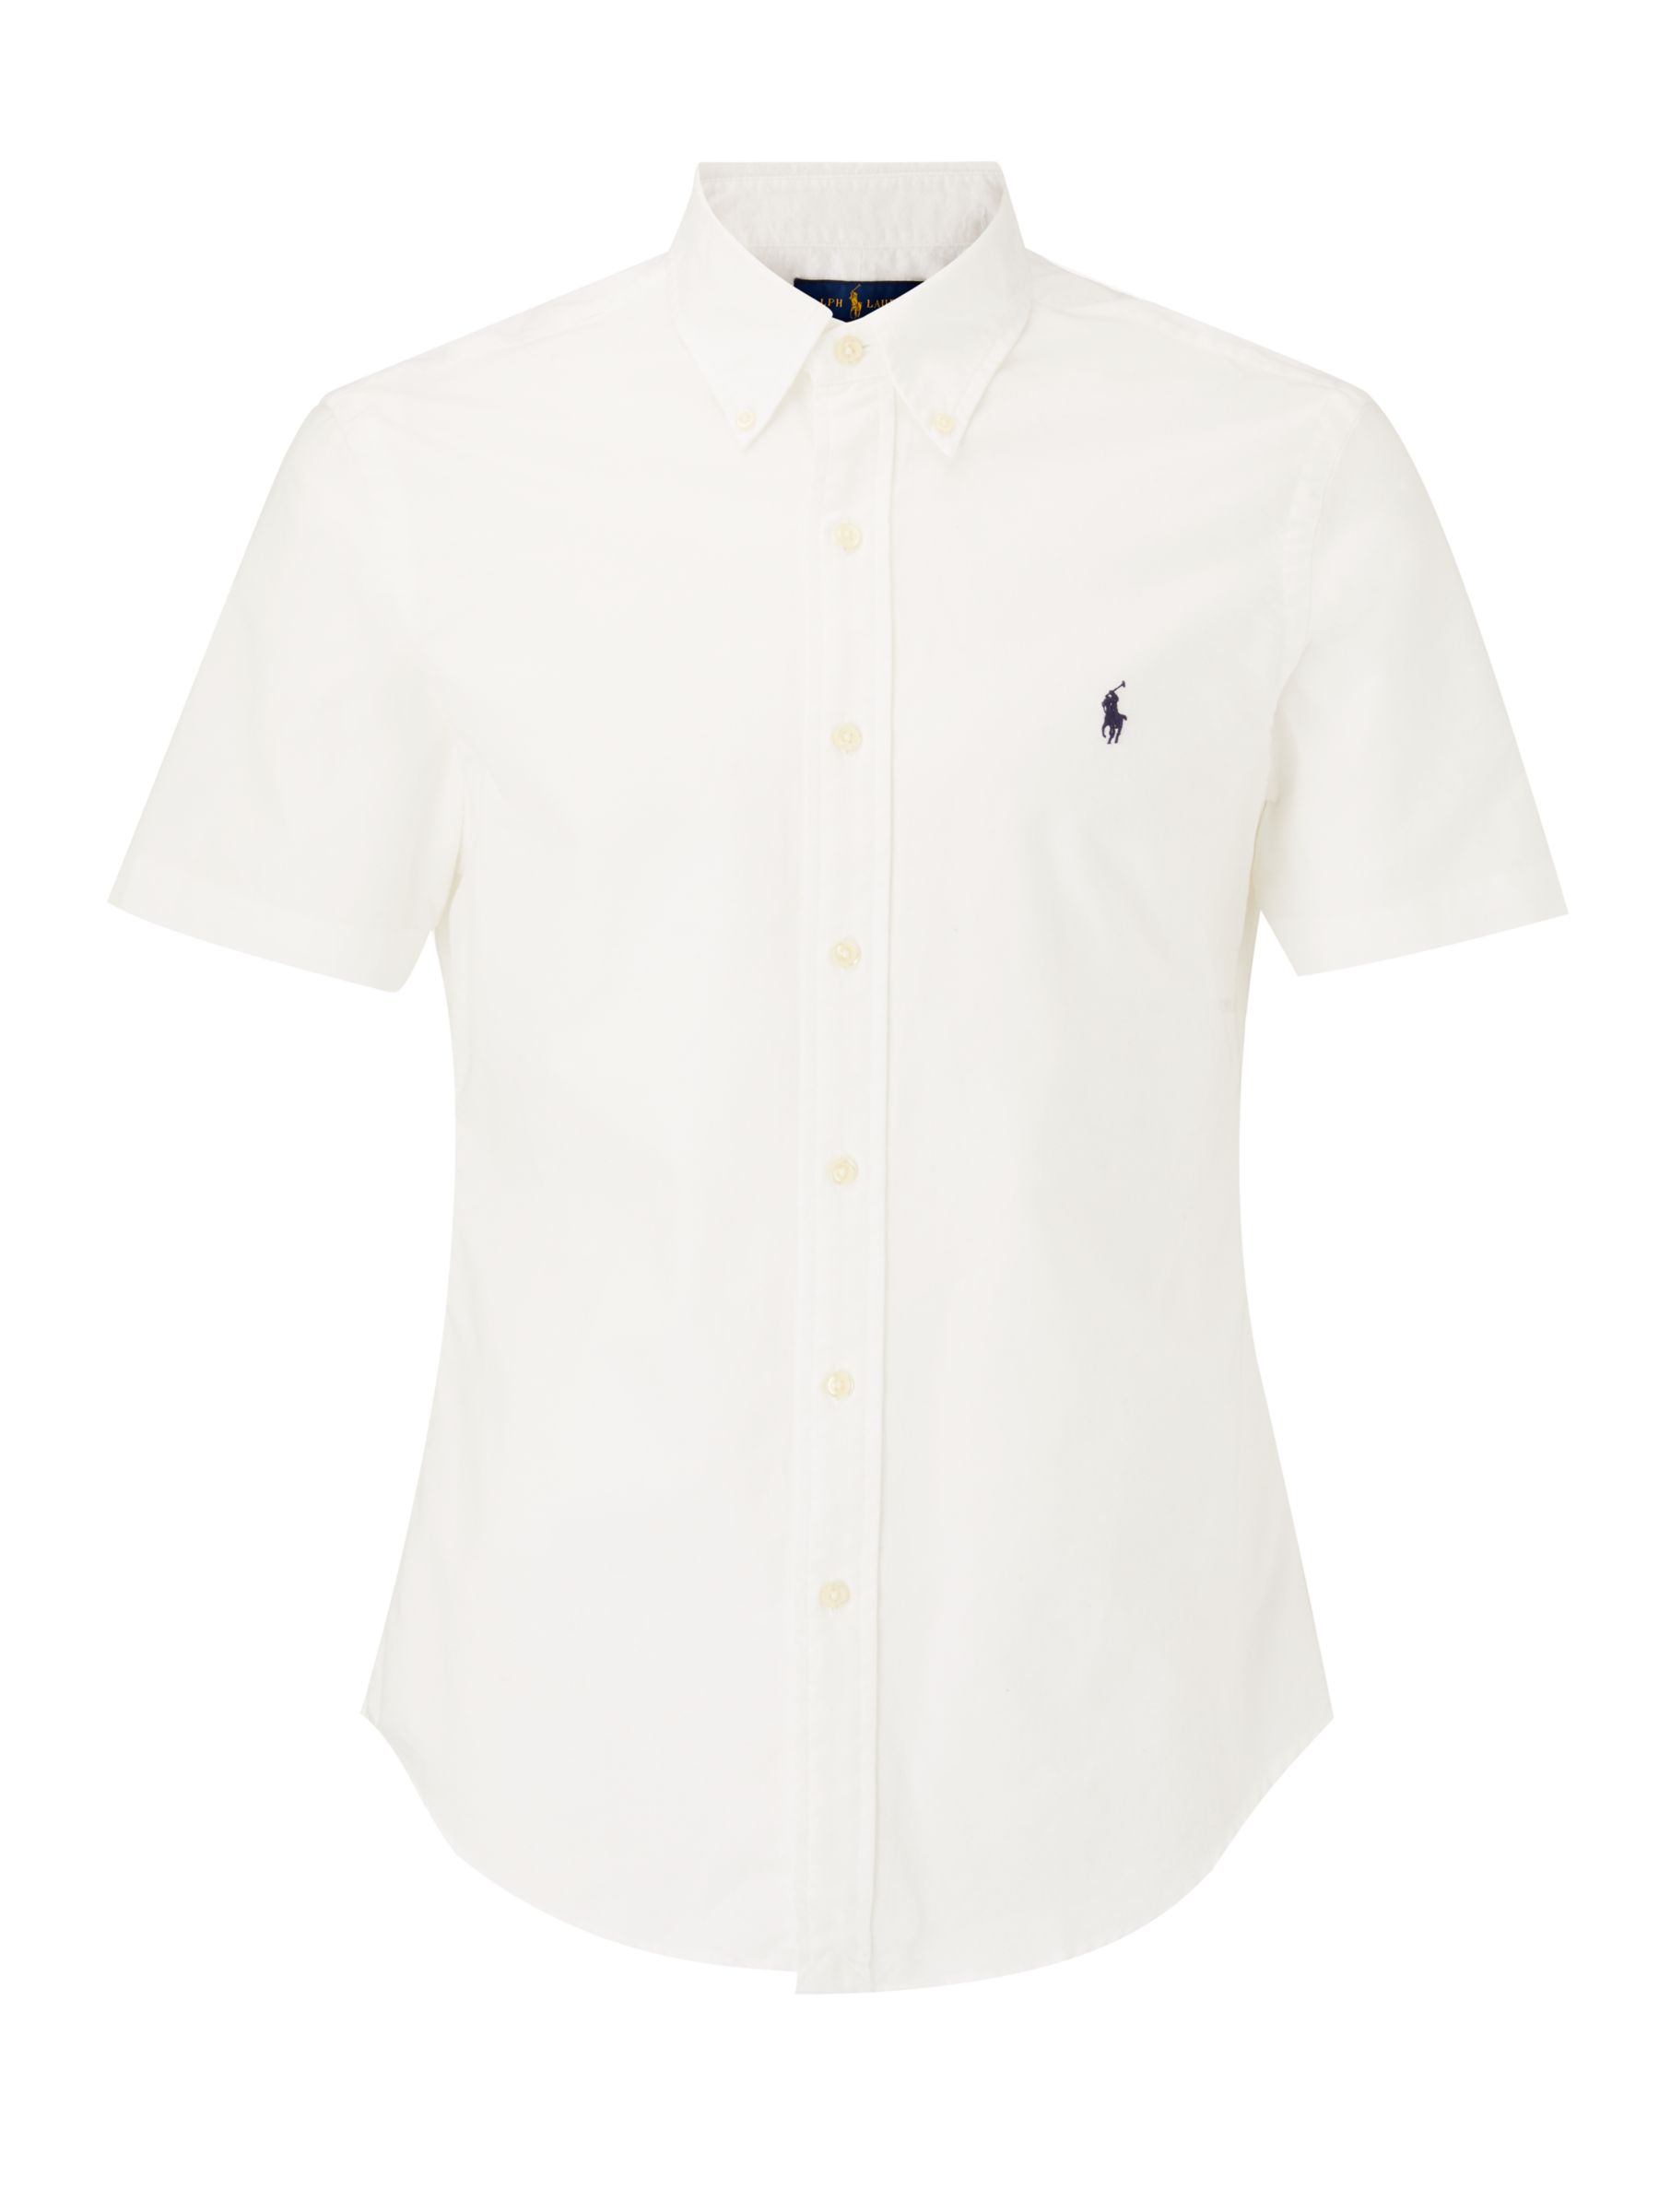 Polo Ralph Lauren Short Sleeve Shirt, White at John Lewis & Partners